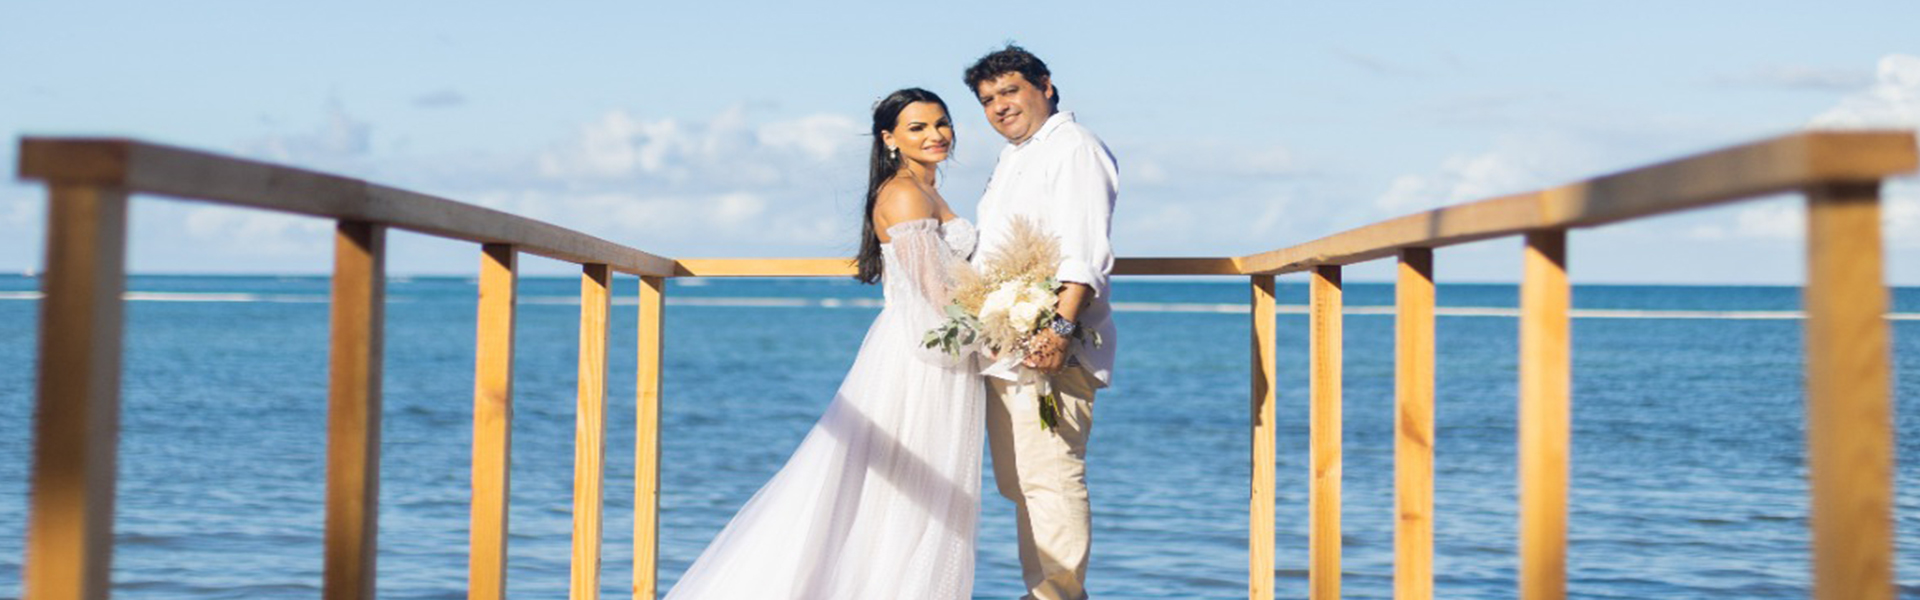 nathalia-douglas-wedding-planner-punta-cana